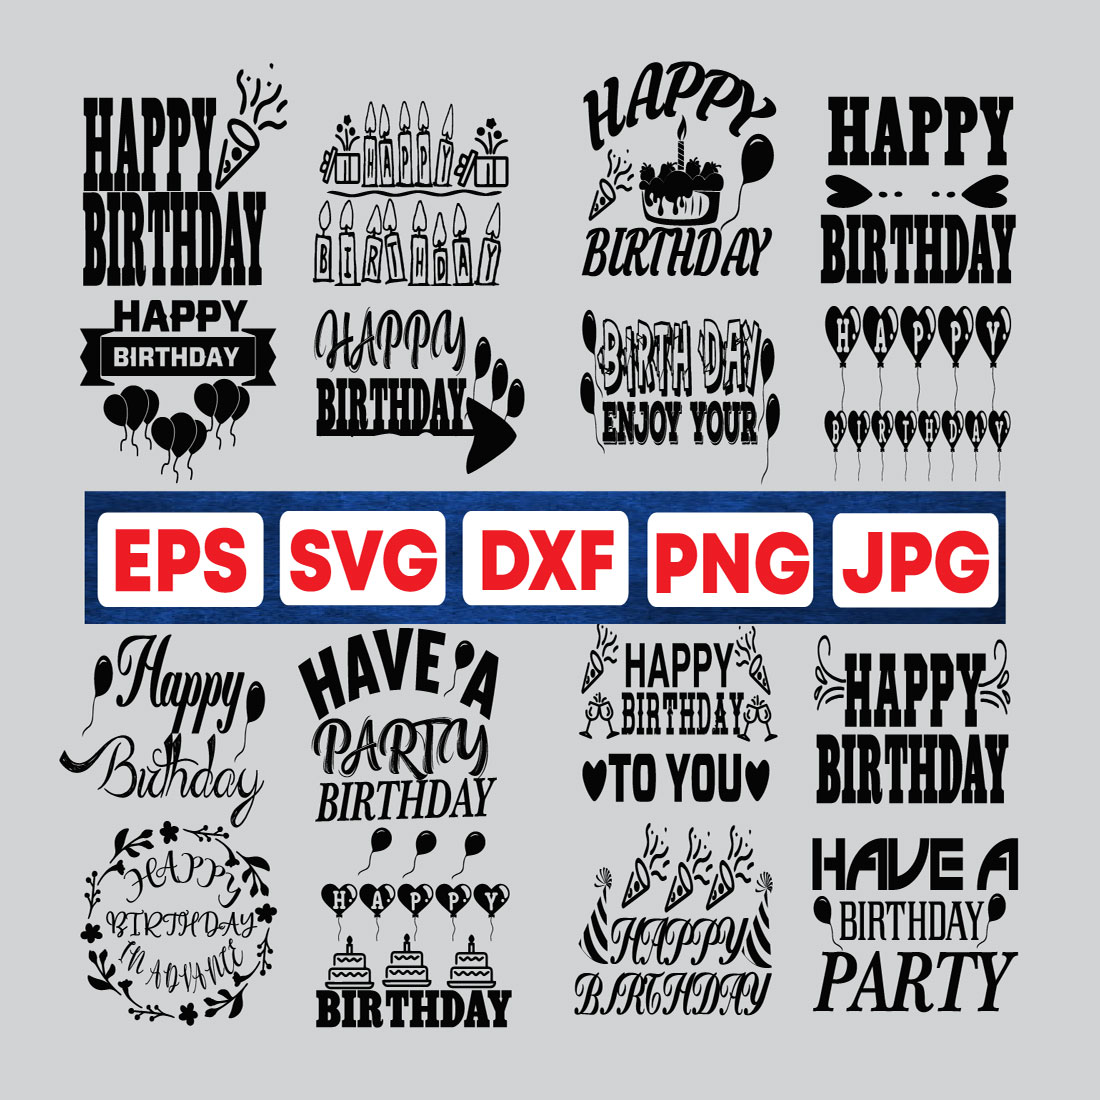 Happy-Birthday-SVG-design cover image.